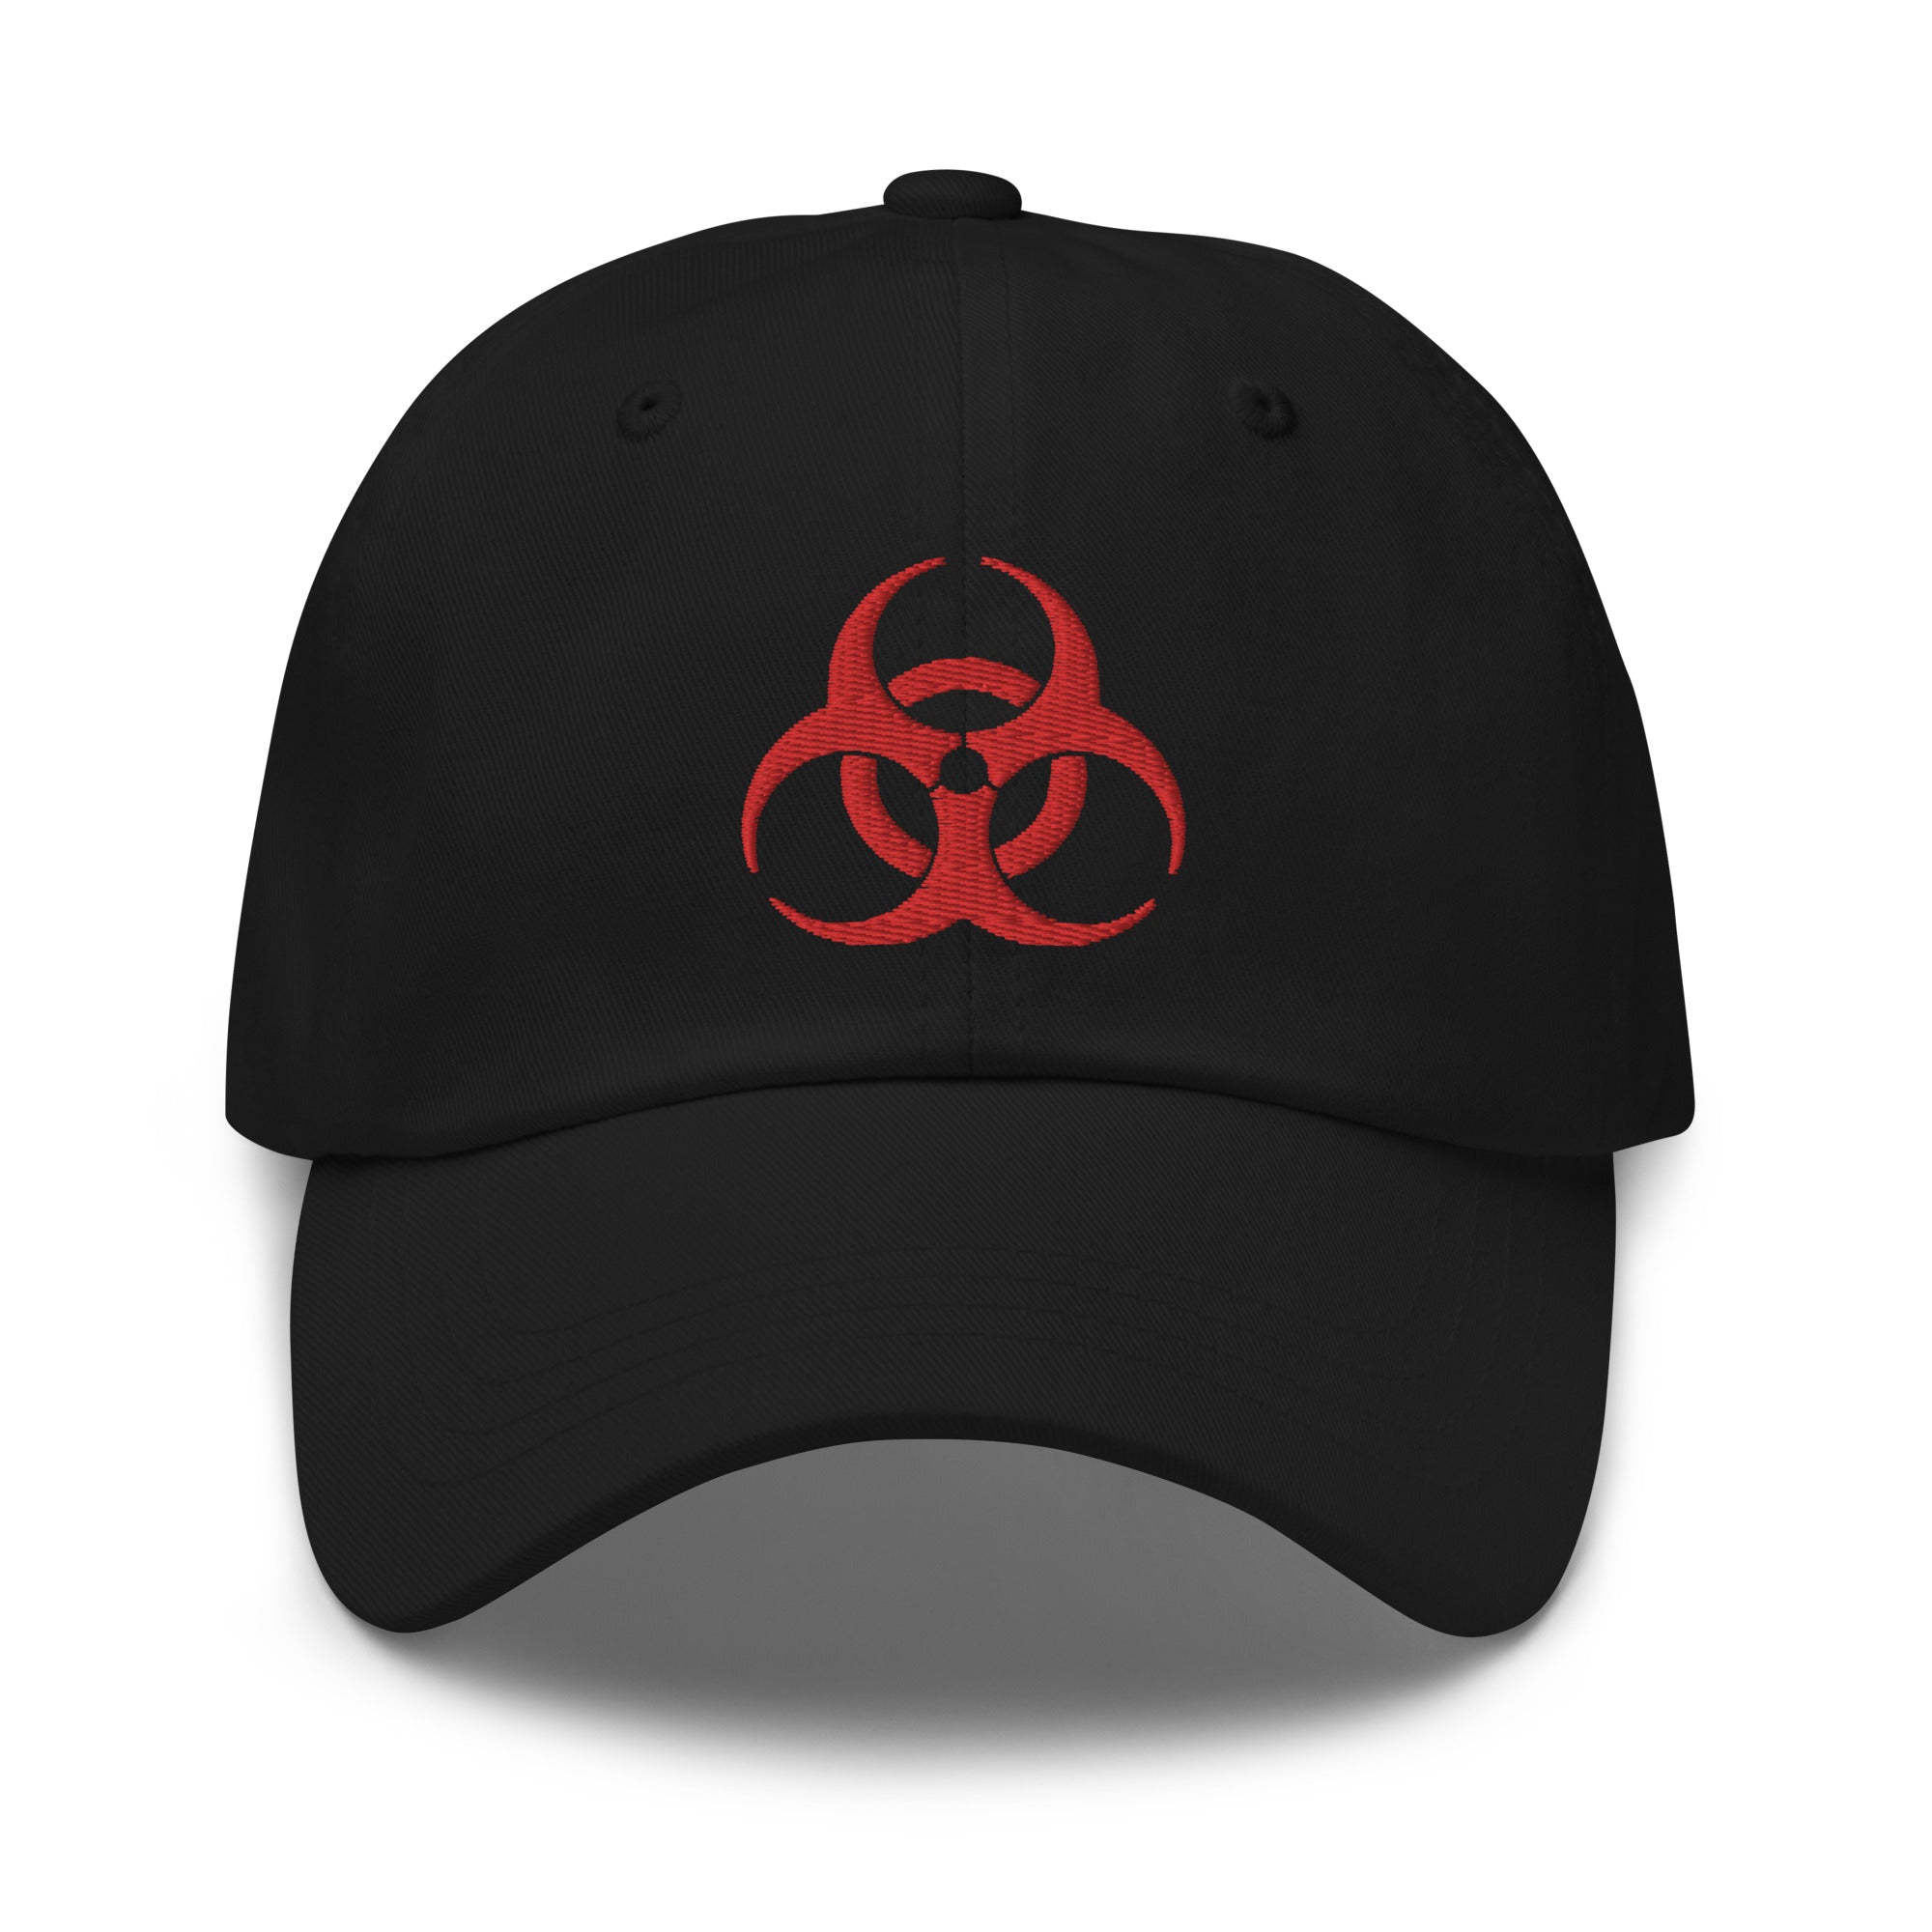 Red Thread Bio Hazard Symbol Warning Sign Embroidered Baseball Cap Dad hat Zombies - Edge of Life Designs